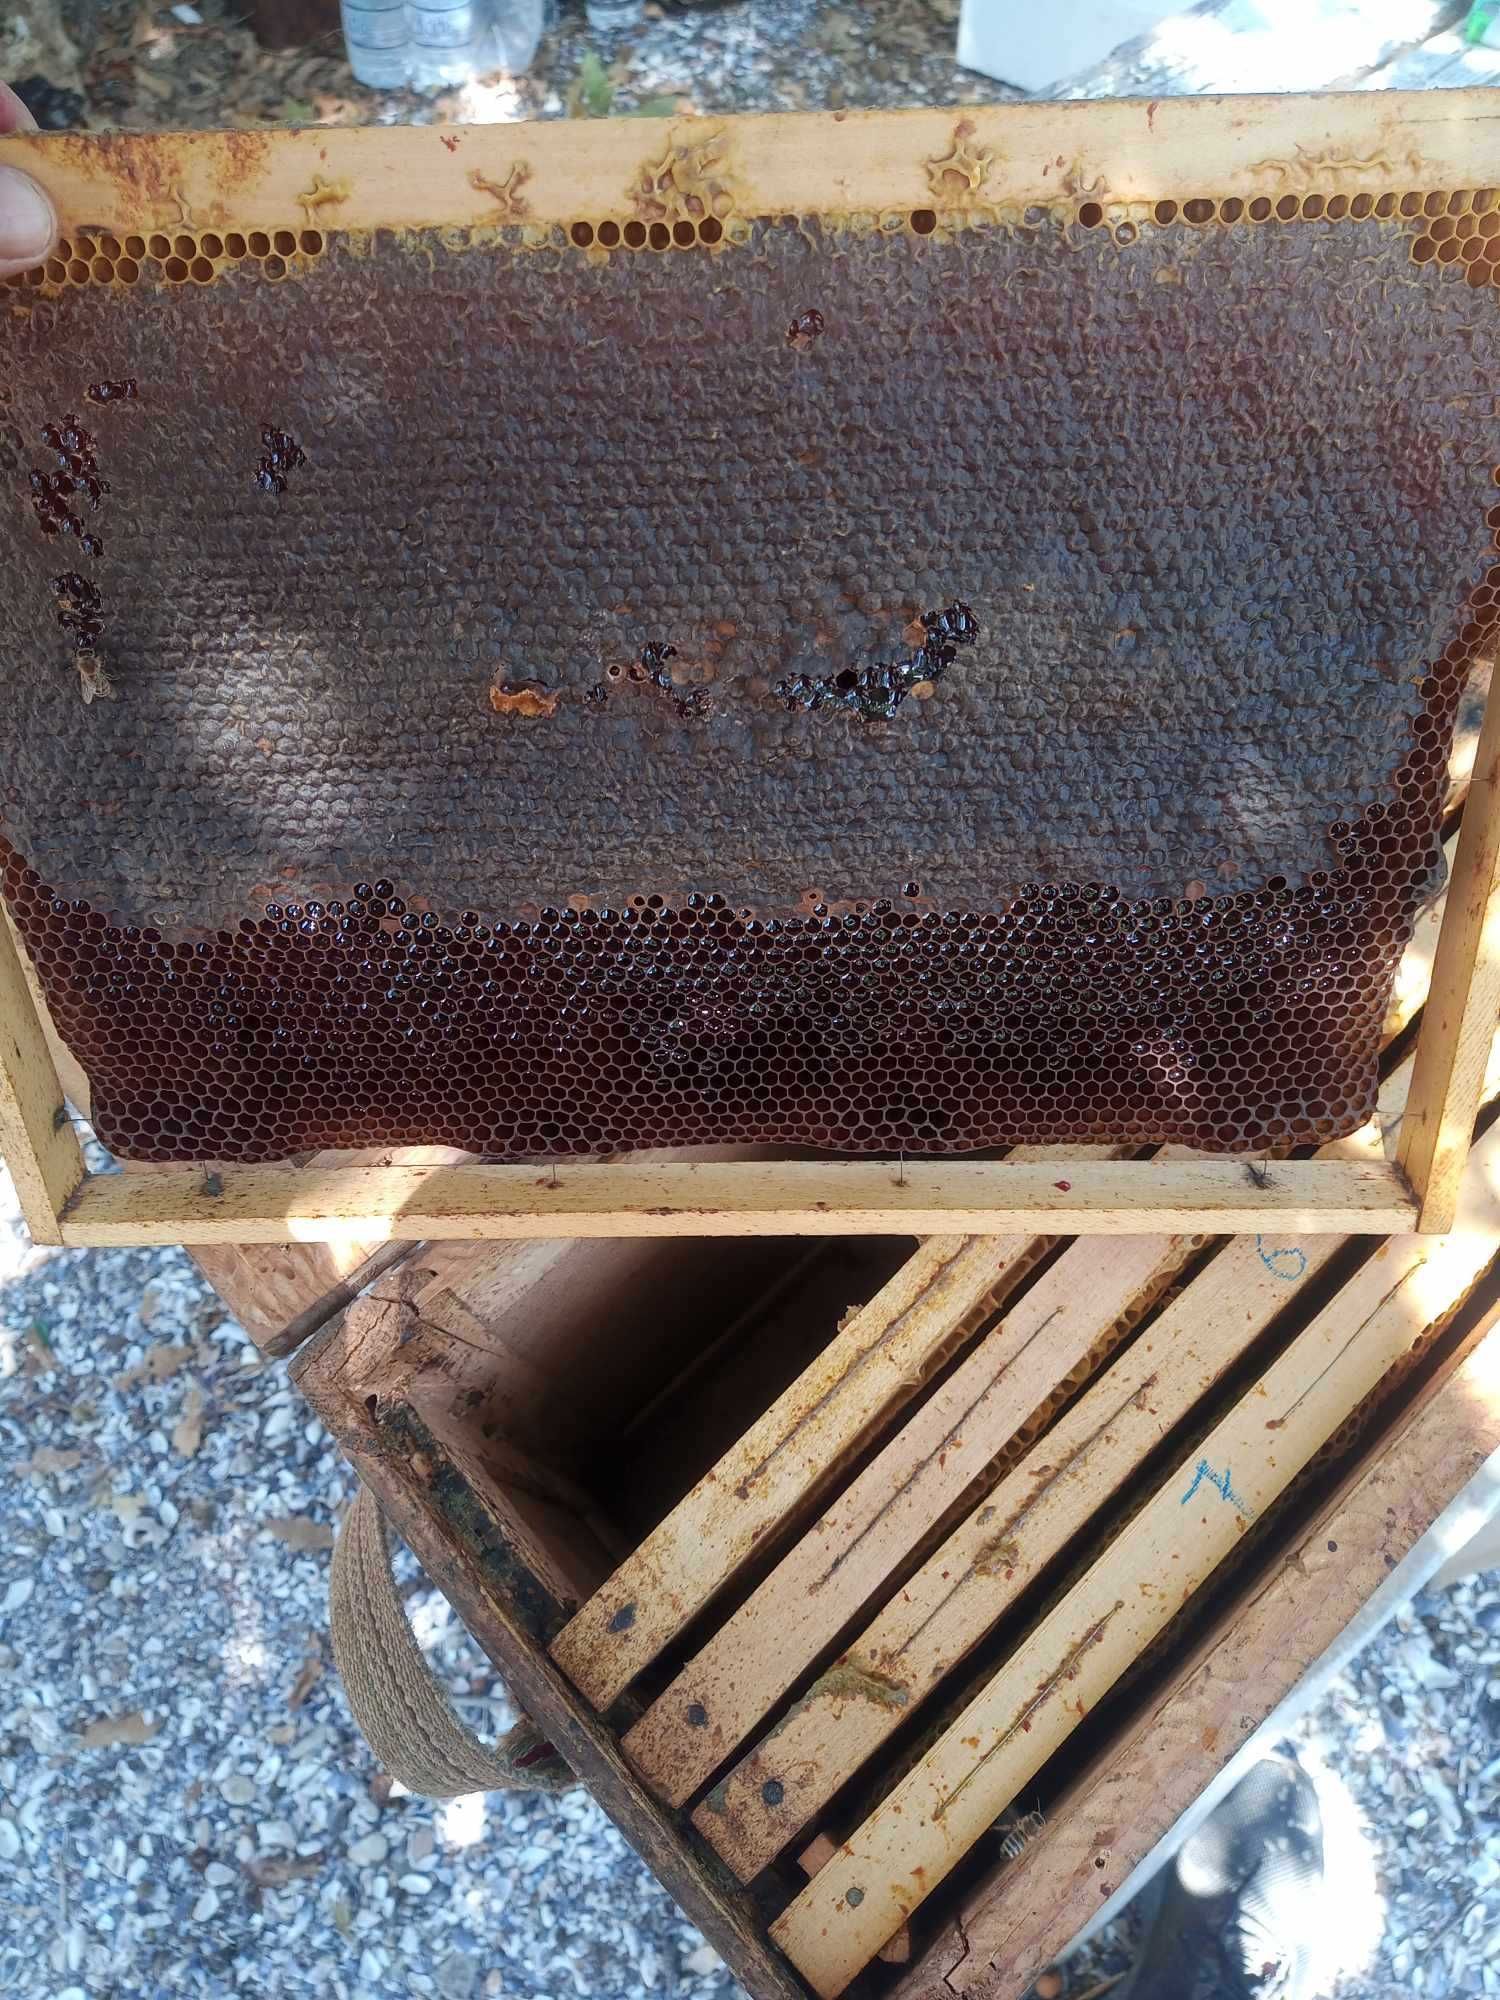 Екологично чист манов мед!